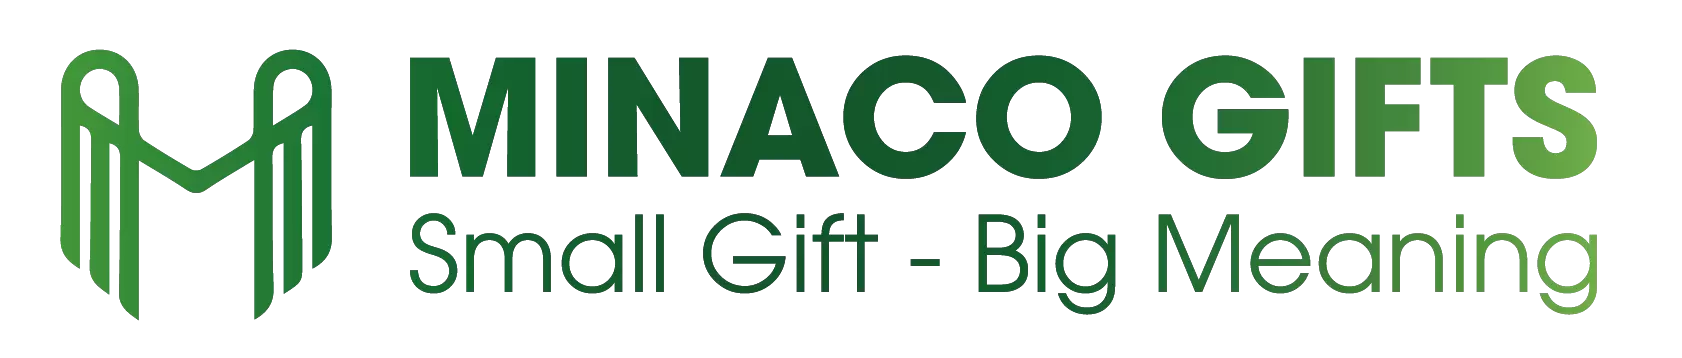 Minaco Gift logo